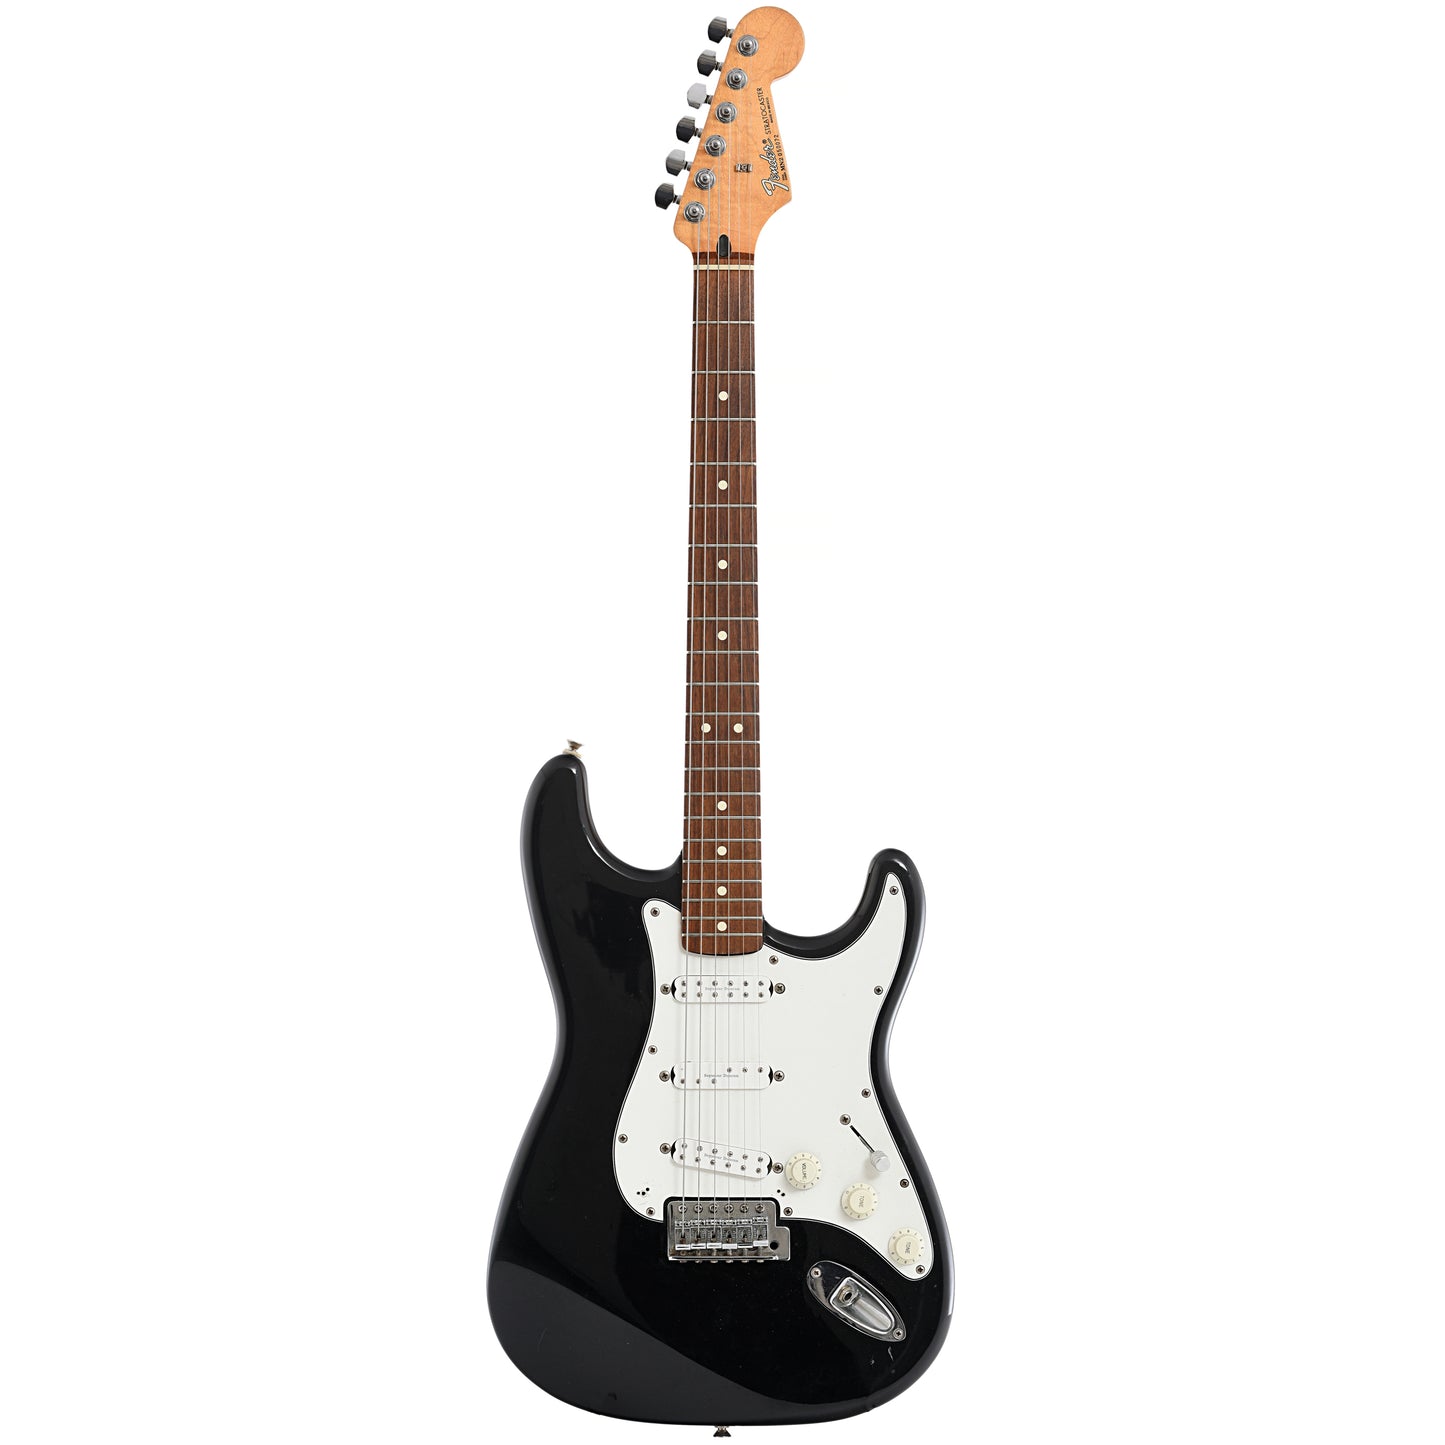 Ful front of Fender Stratocaster Standard Electric Guitar (c.1992-93)